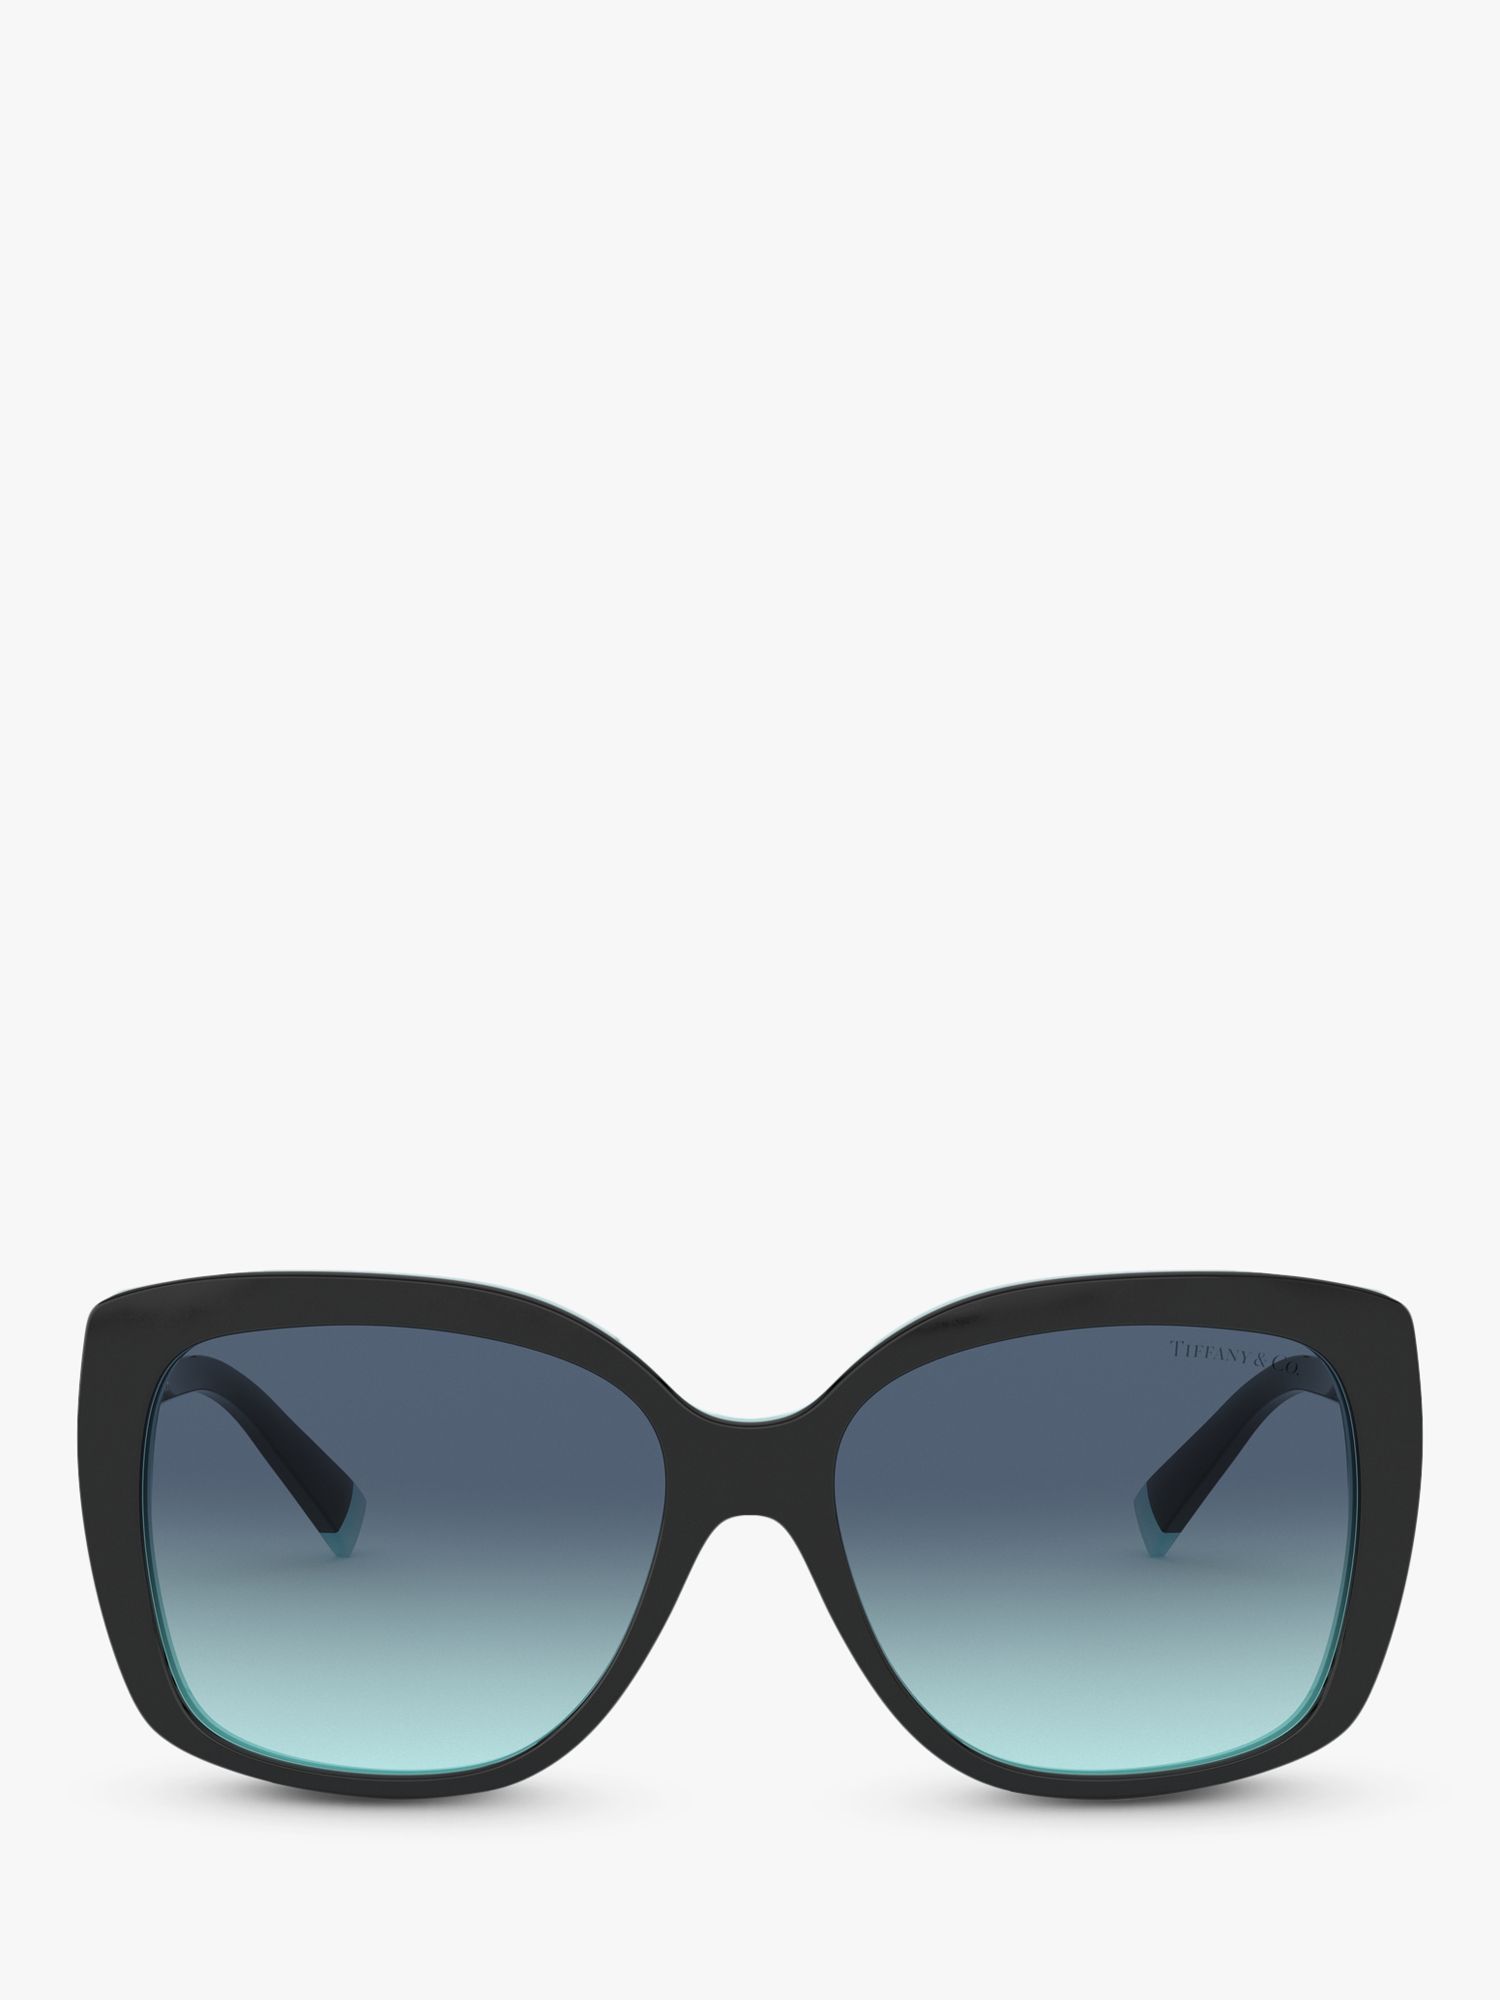 Tiffany & Co TF4171 Women's Square Sunglasses, Aqua Blue